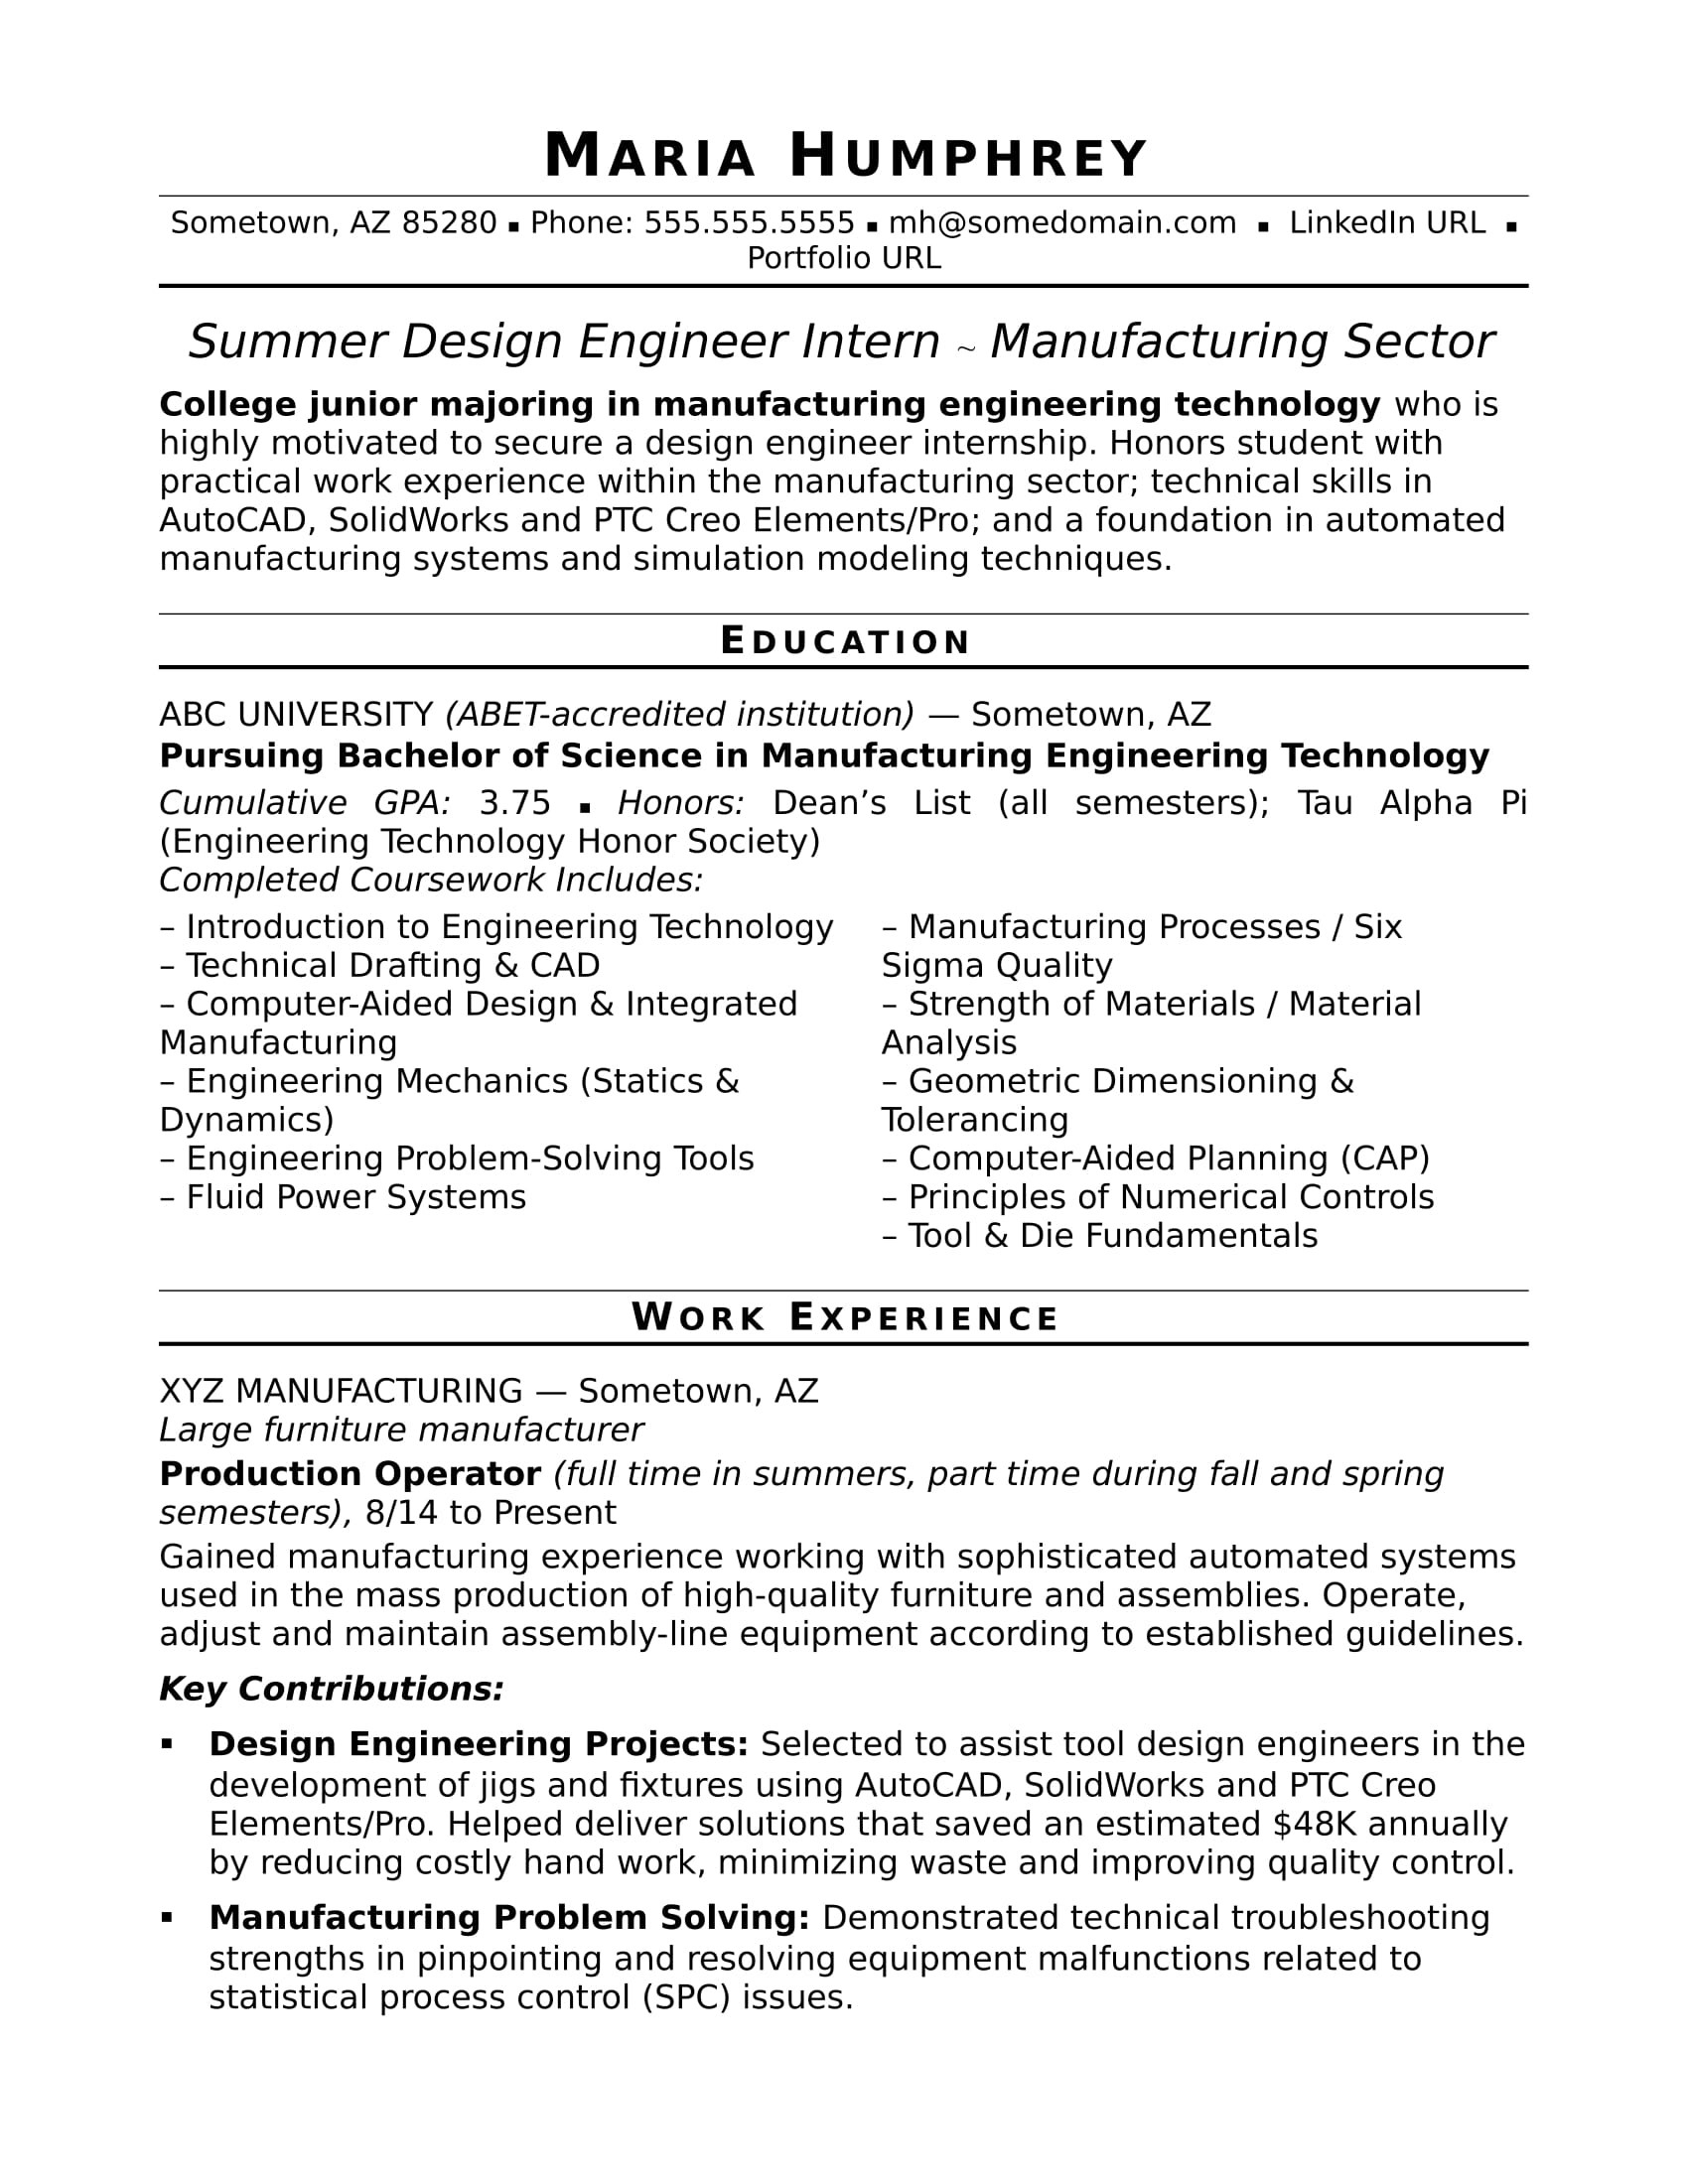 Sample Resume for Entry Level Product Engineer Sample Resume for An Entry-level Design Engineer Monster.com